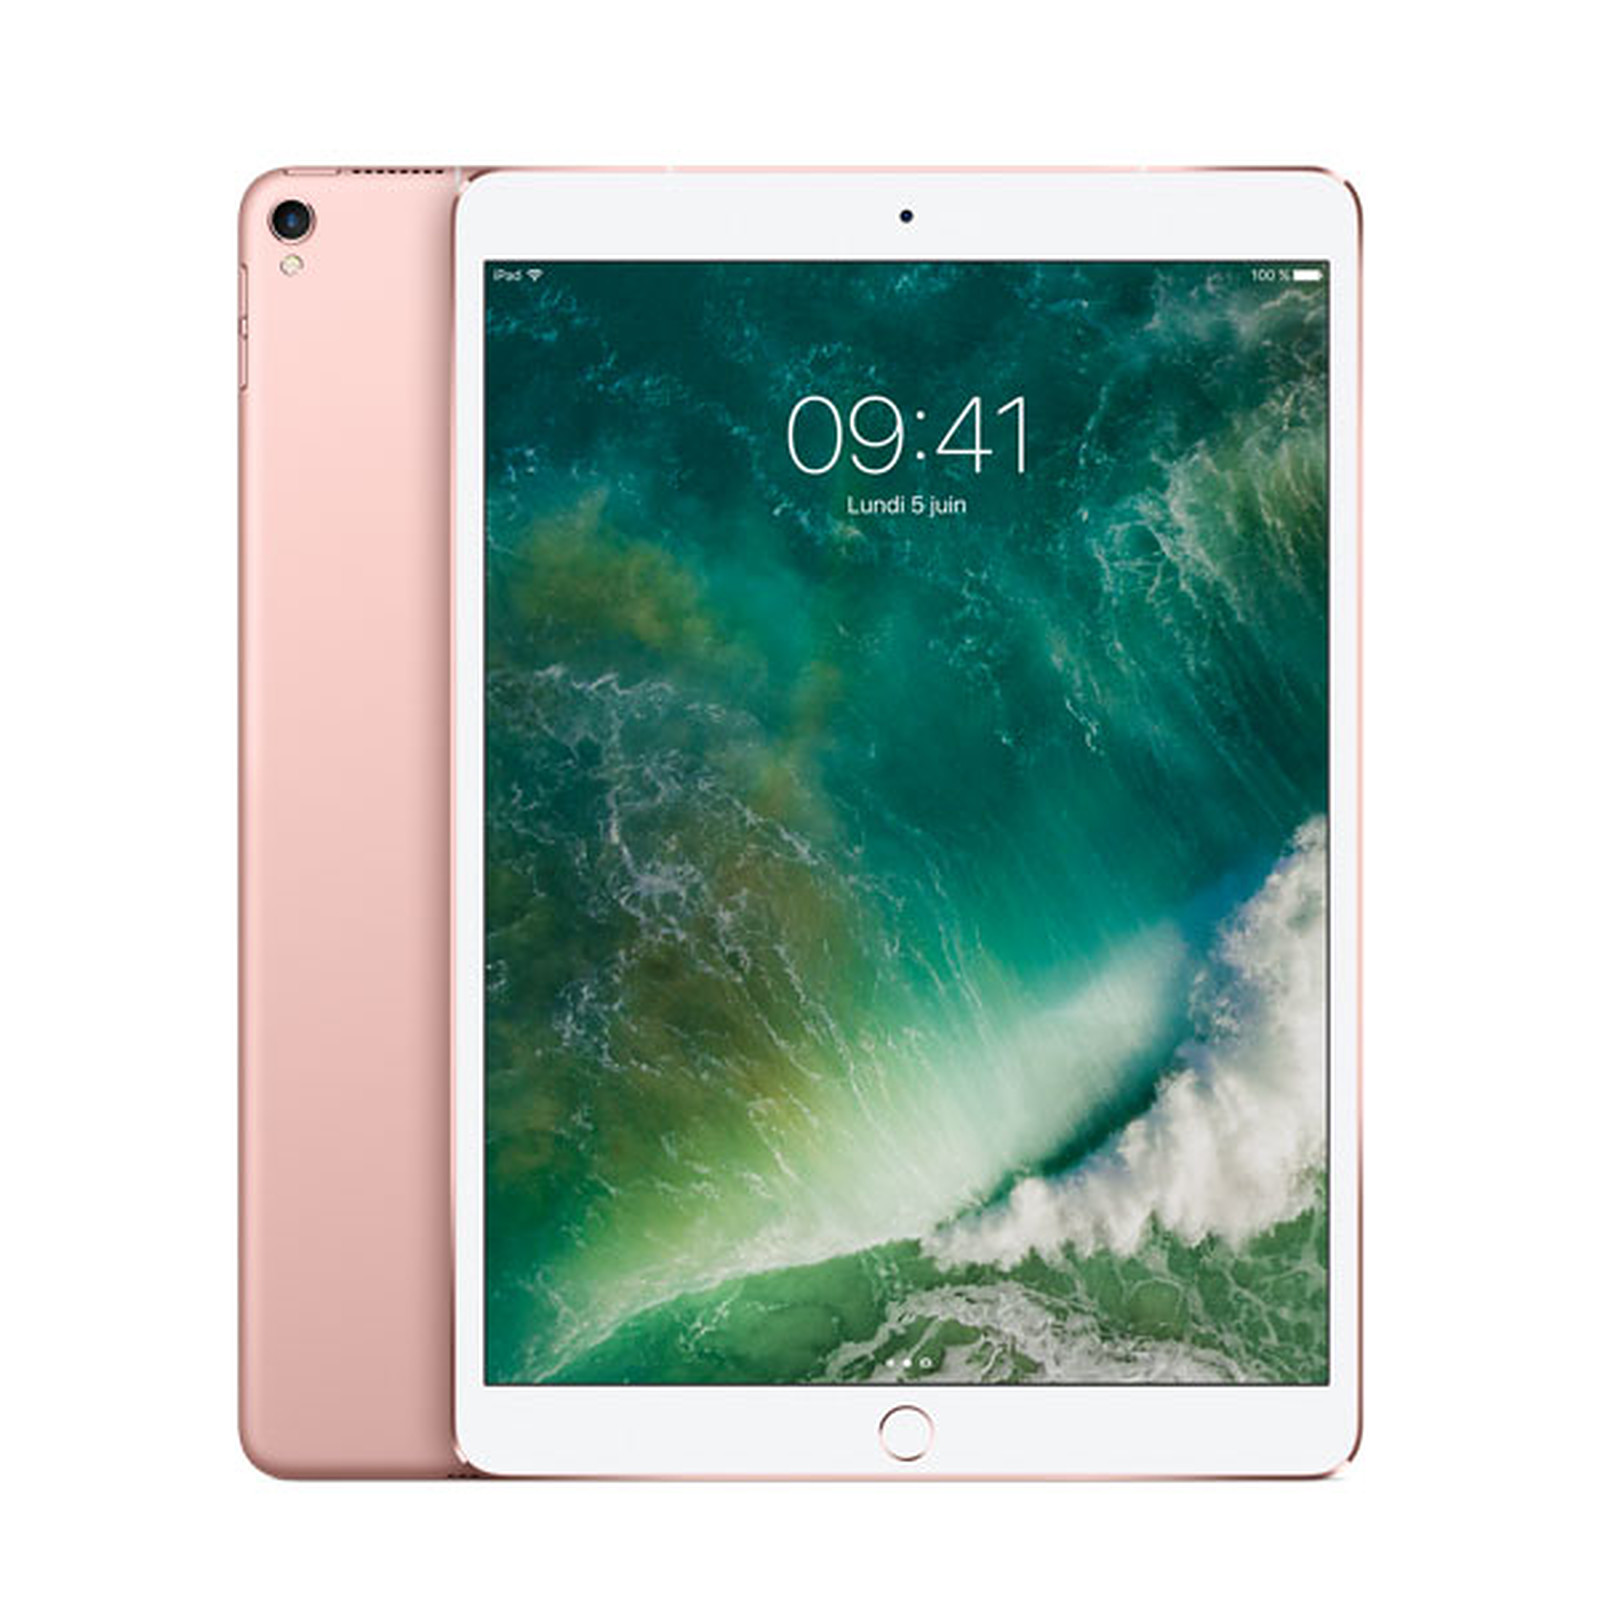 Apple iPad Pro 10.5 pouces 256 Go Wi-Fi Or Rose · Reconditionne - Tablette tactile Apple